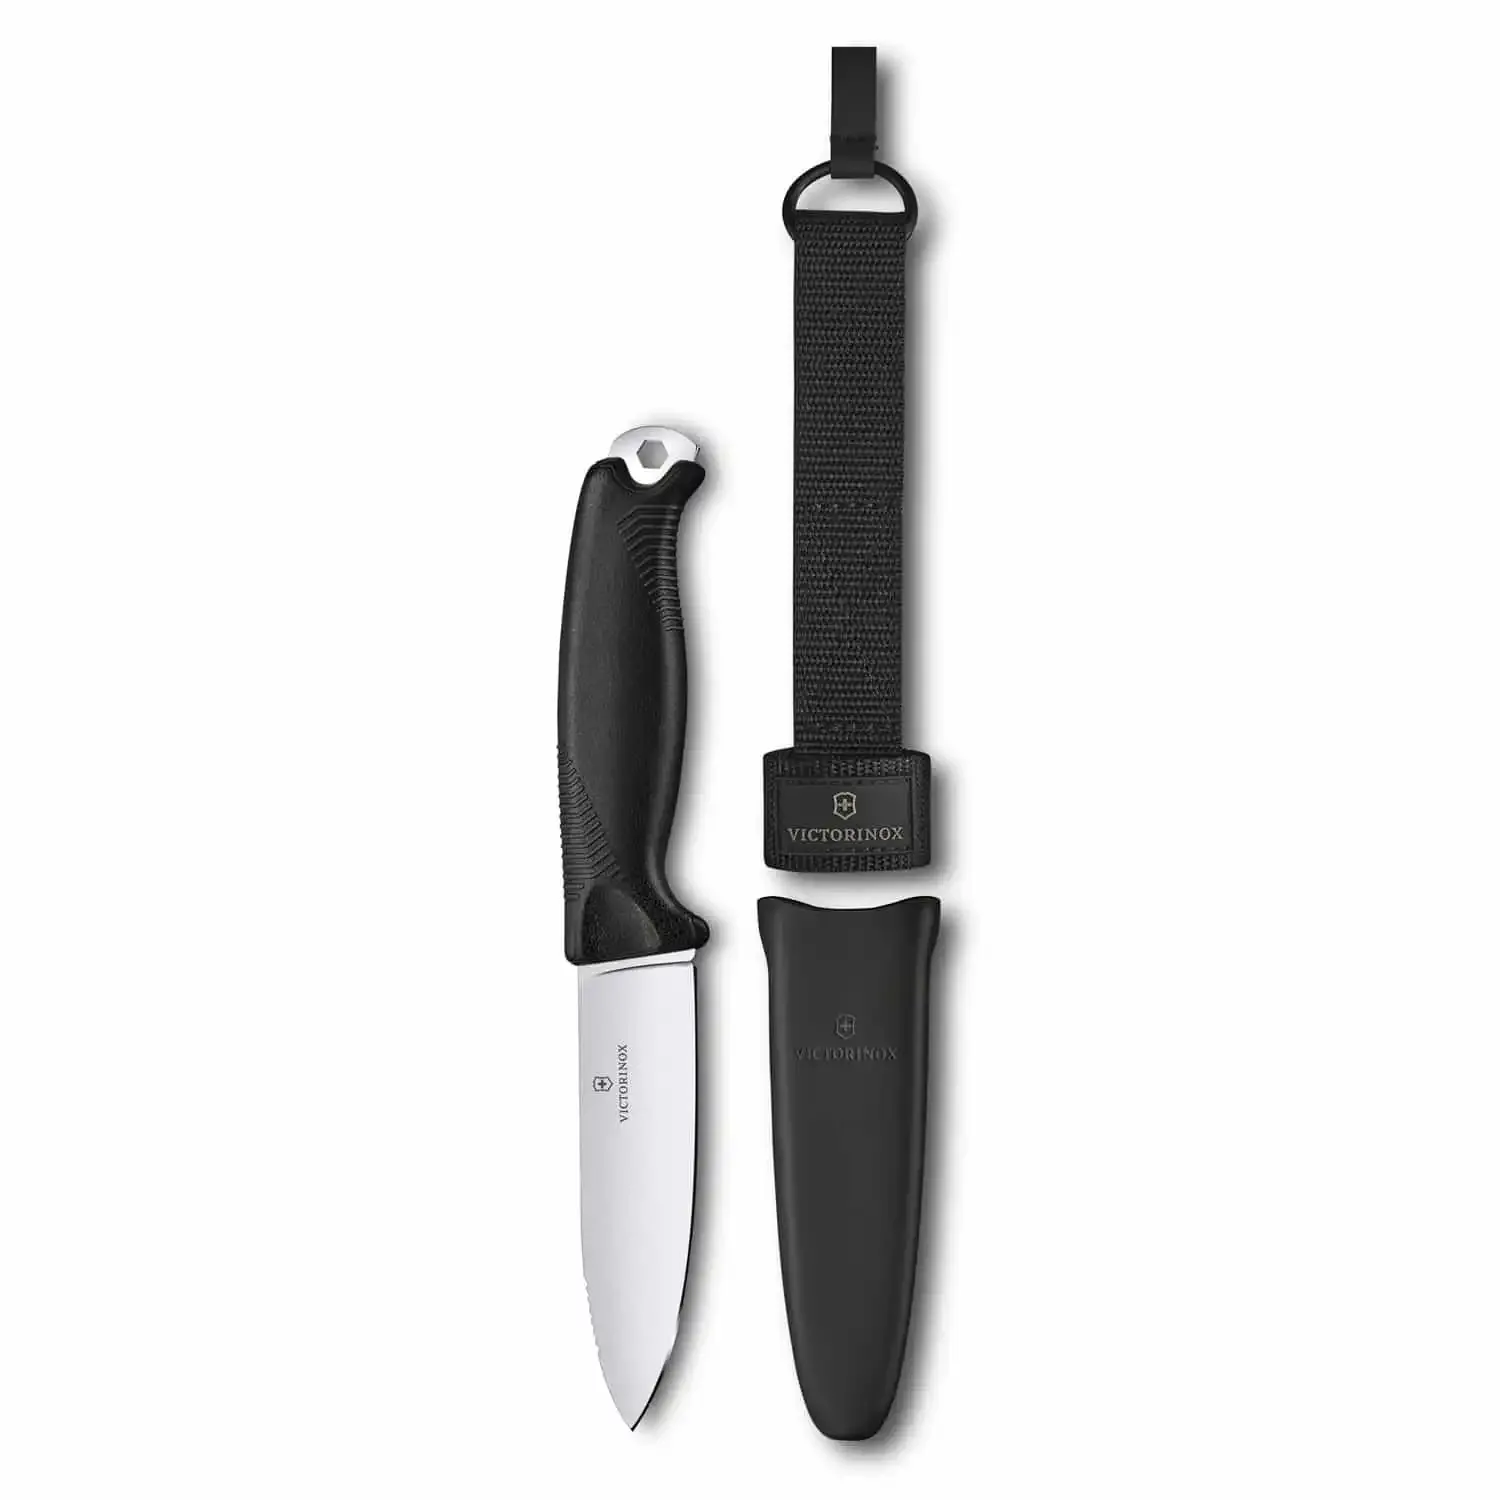 Victorinox 3.0902.3 Venture Bıçak, Siyah - 1